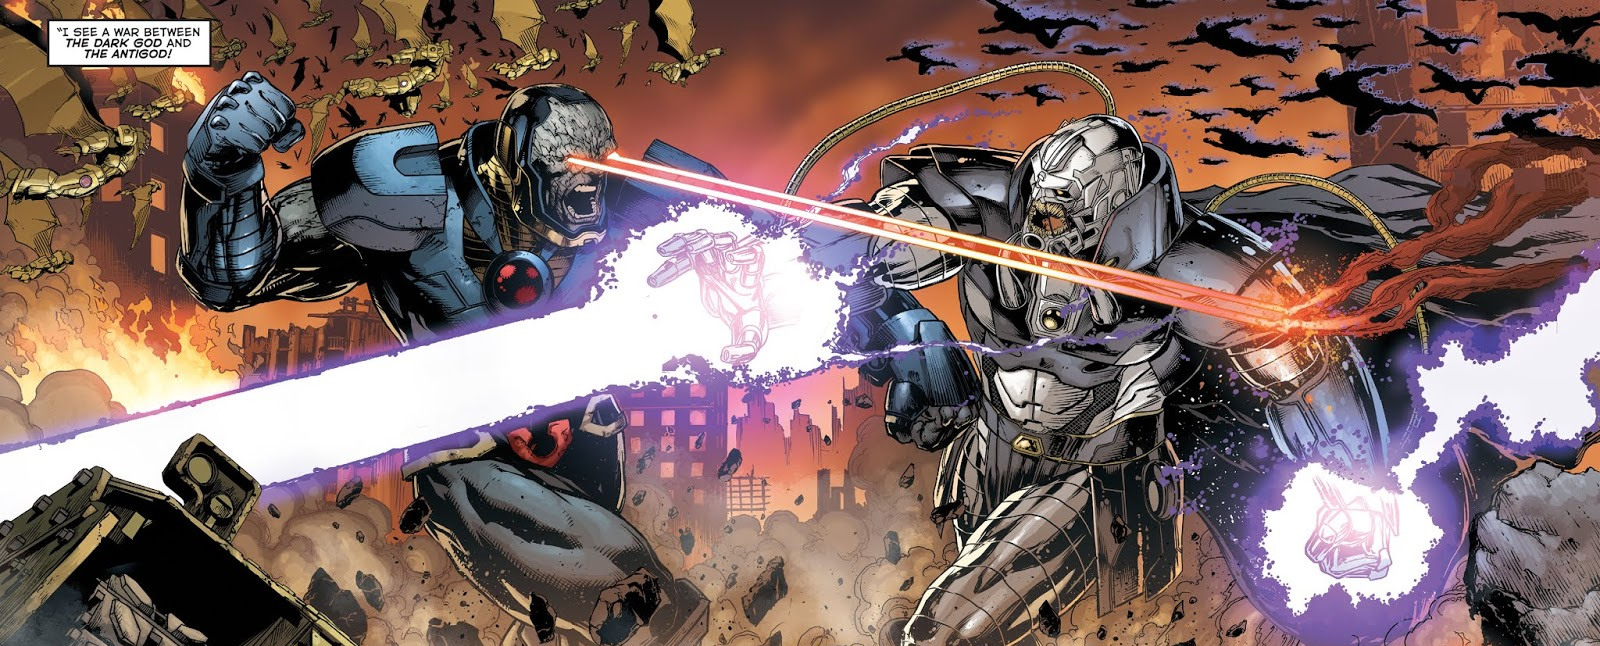 In "Darkseid War" (2015), Minalippe foretells the prophecy of the Darkseid War.